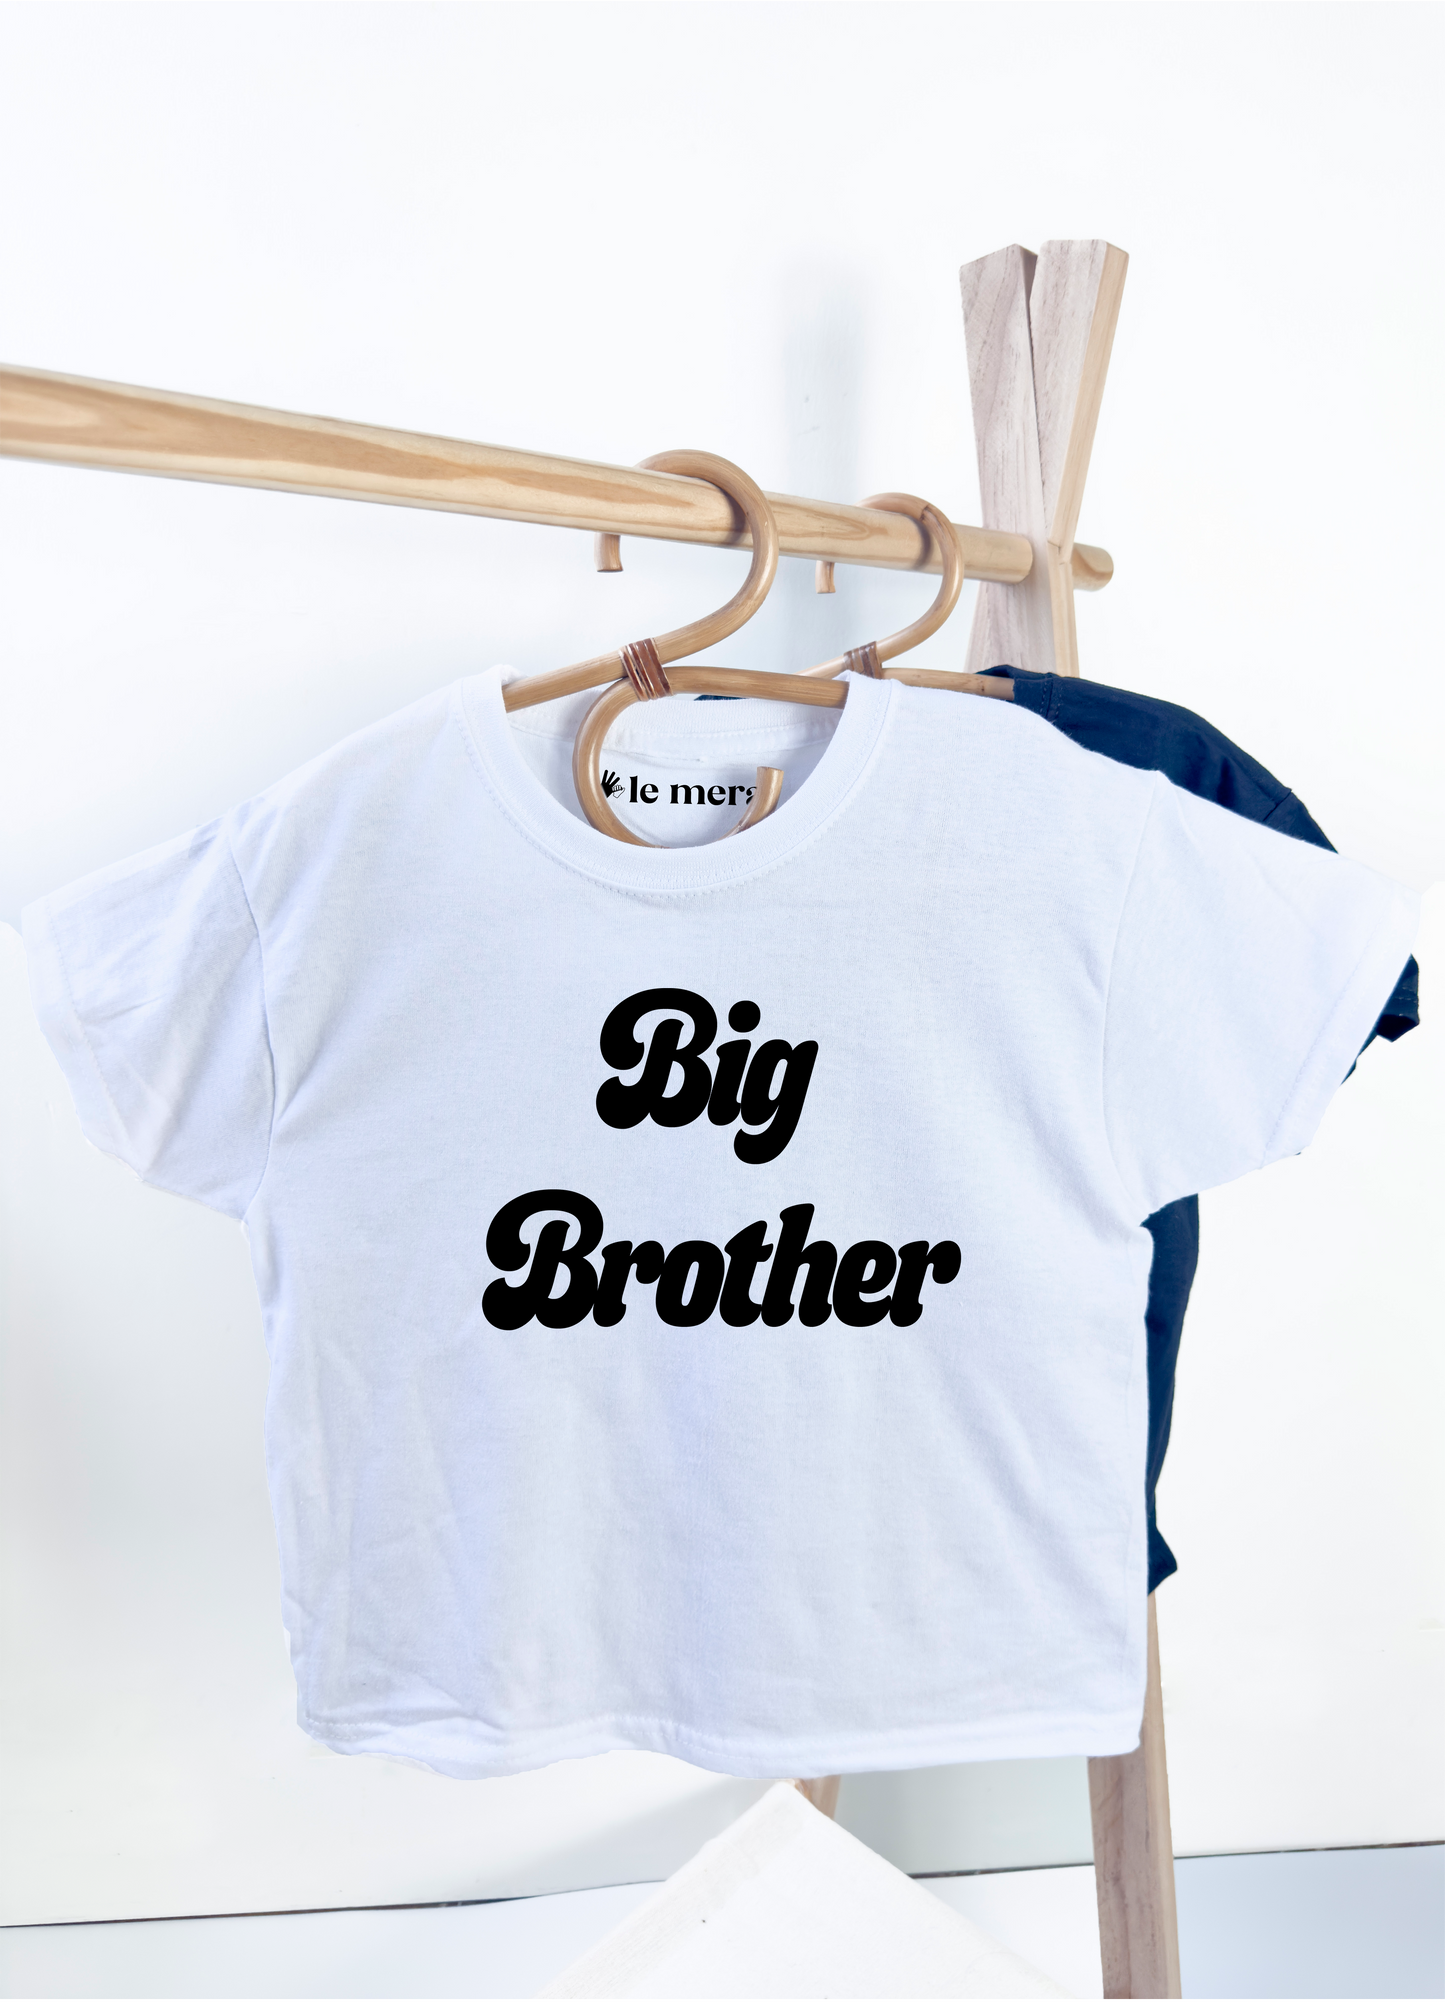 Retro Big Brother Kids T-Shirt